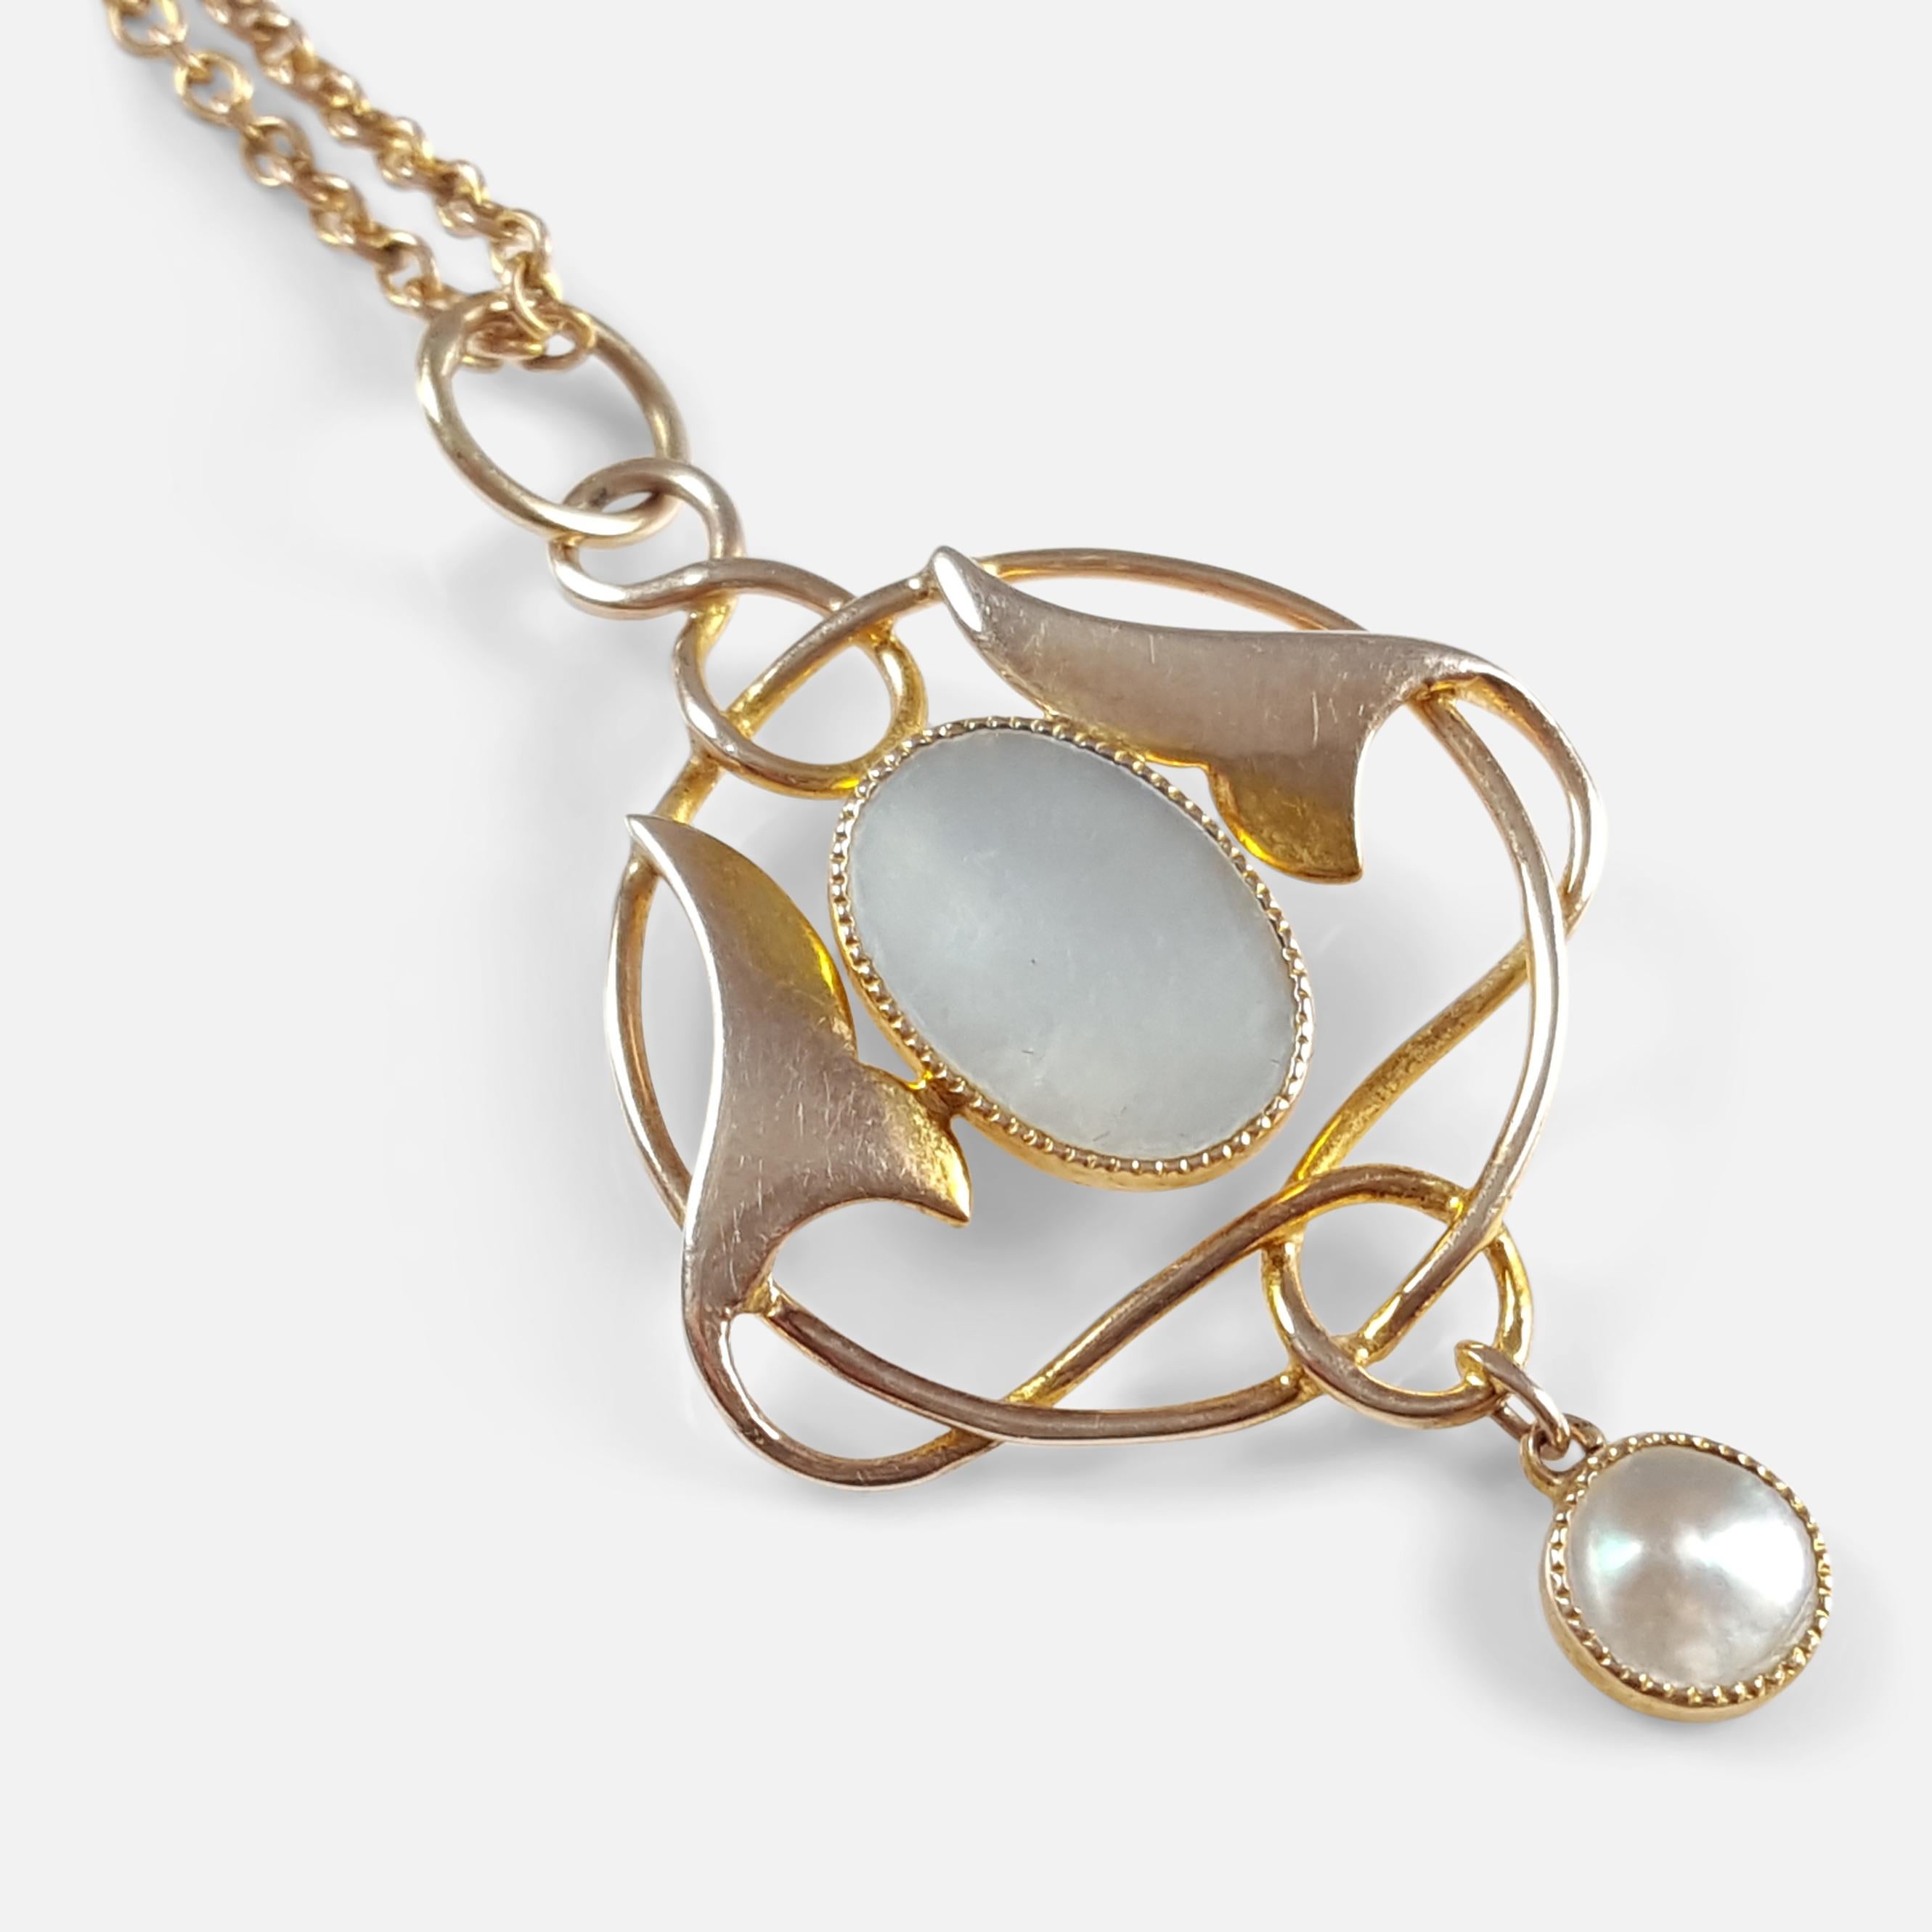 Women's Art Nouveau Murrle Bennett & Co 9 Karat Gold and Pearl Pendant with Chain